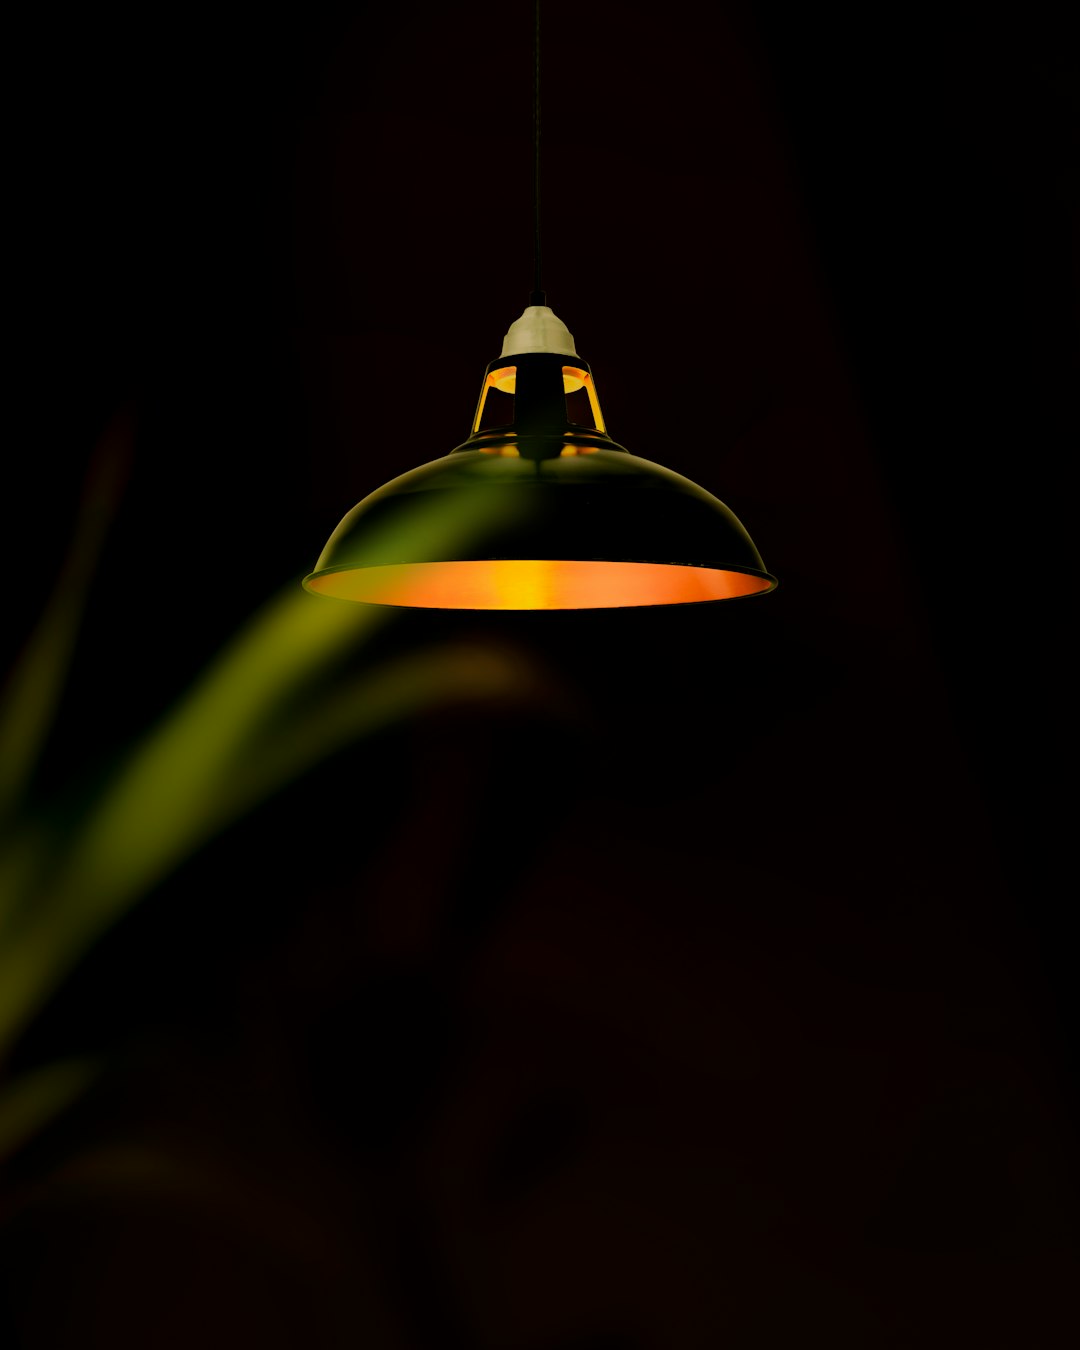 green pendant lamp turned on in dark room